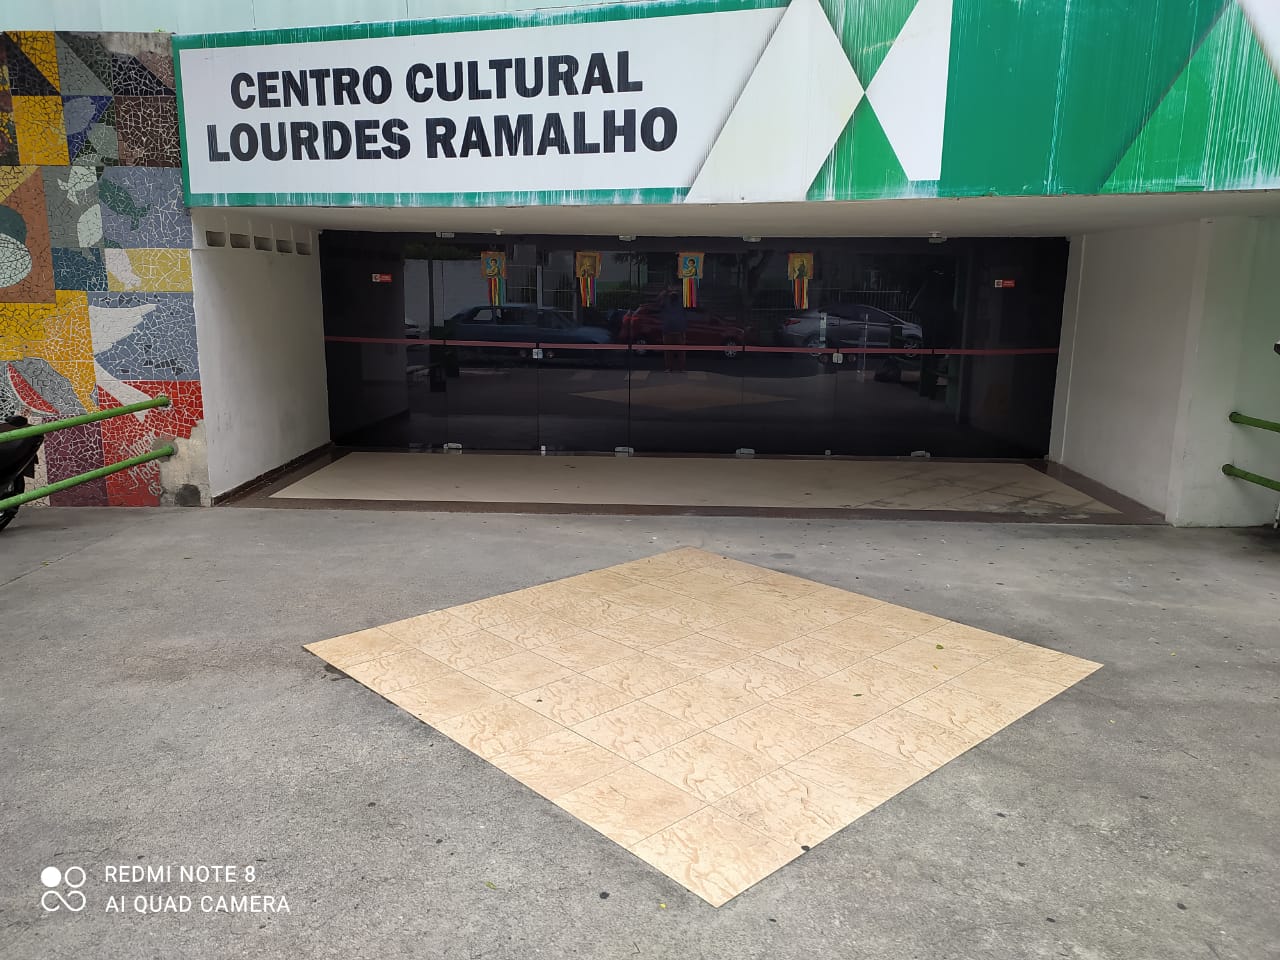 Centro Cultural Lourdes Ramalho